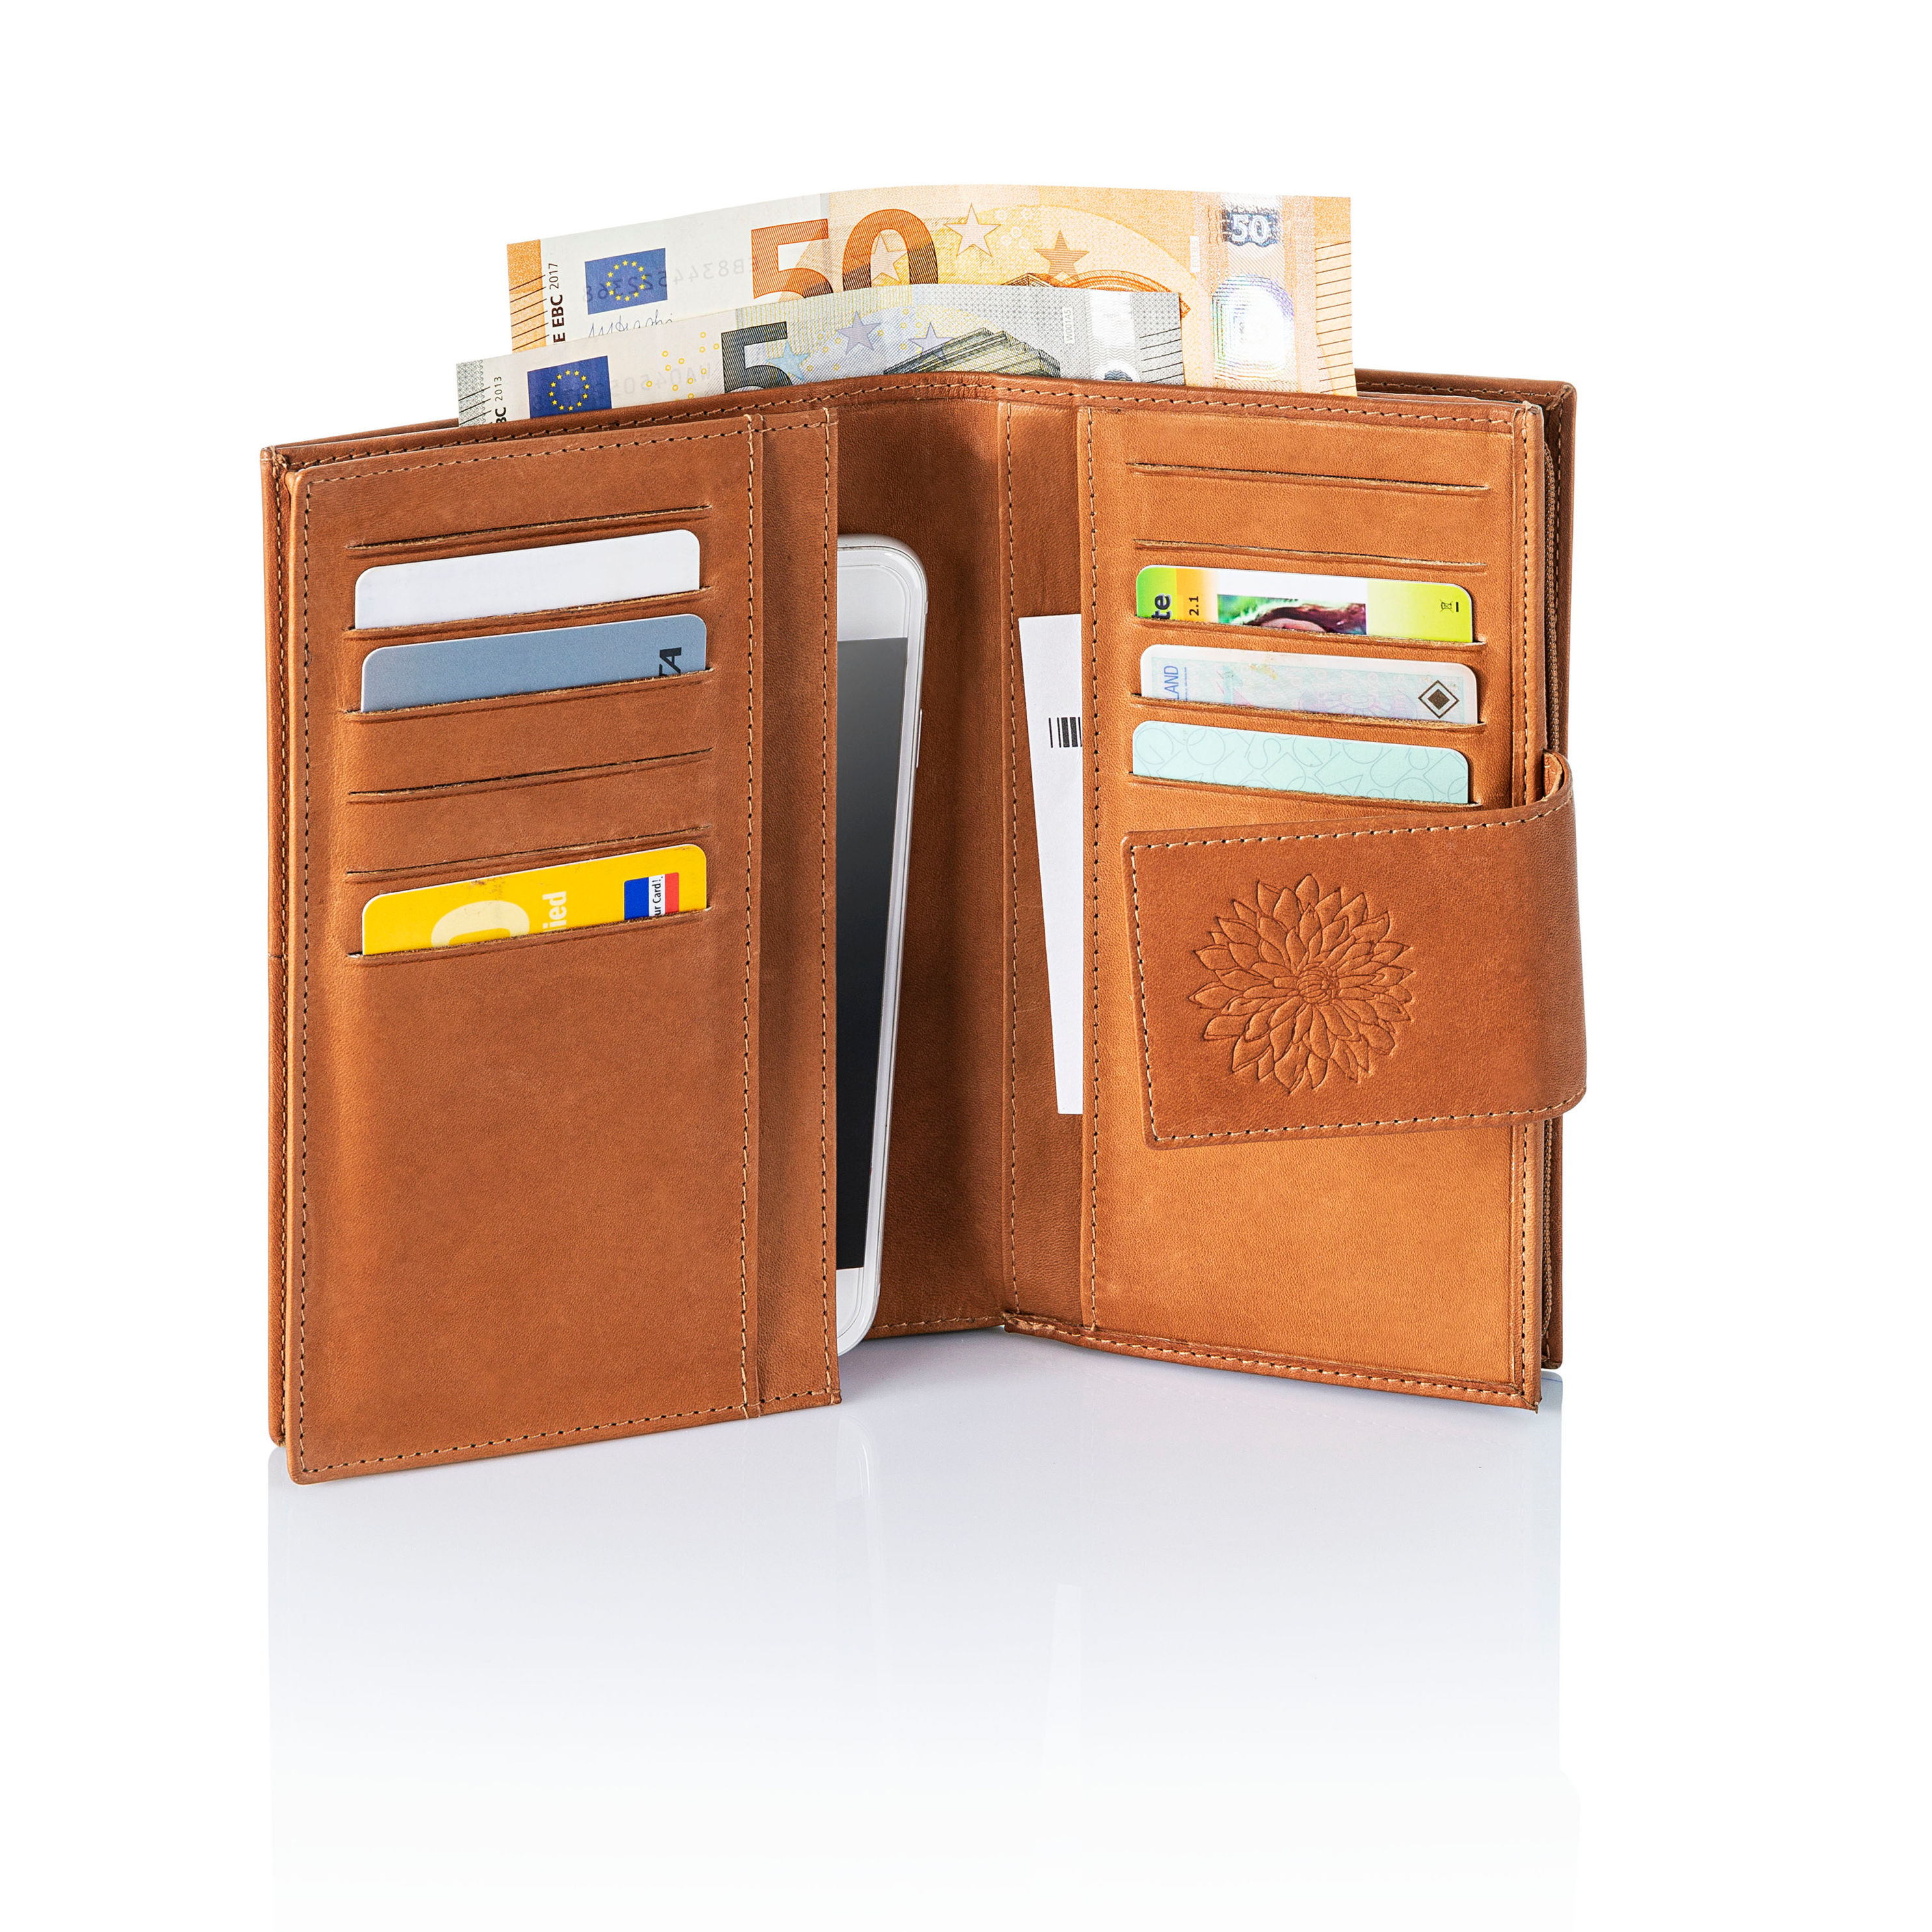 HJP RFID-Geldbörse Dahlie Leder, Farbe: cognac | Weltbild.ch